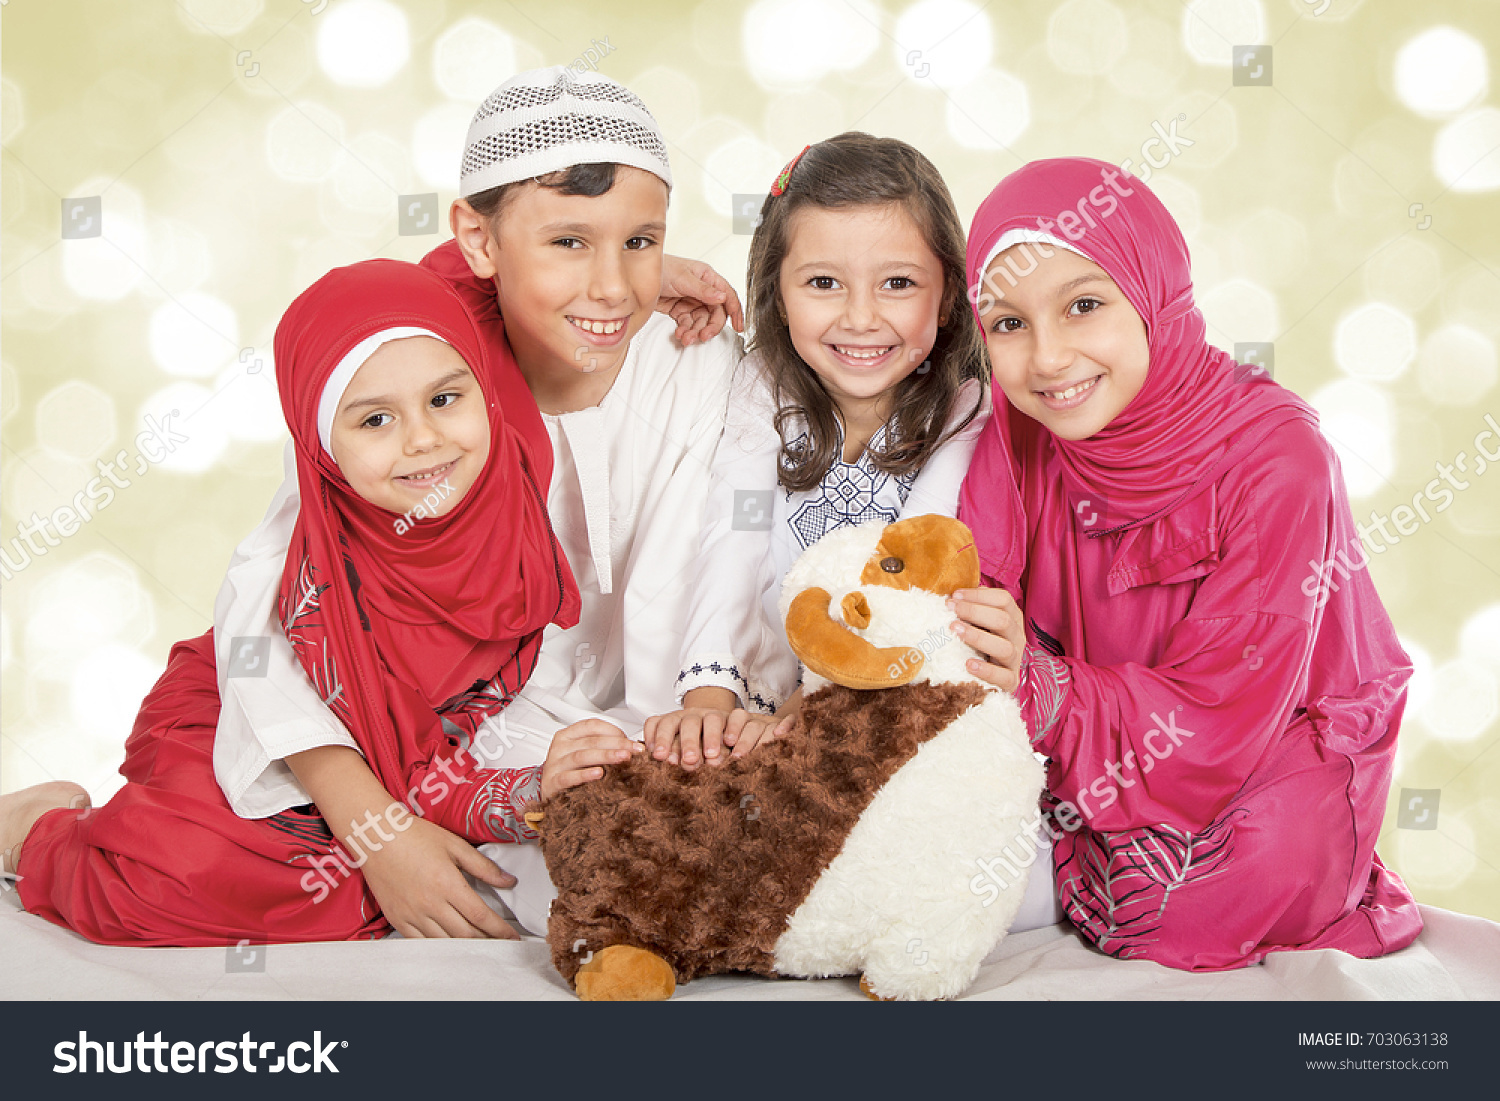 Happy little Muslim kids playing with sheep toy - Family celebrating Eid ul Adha - Happy Sacrifice Feast #703063138